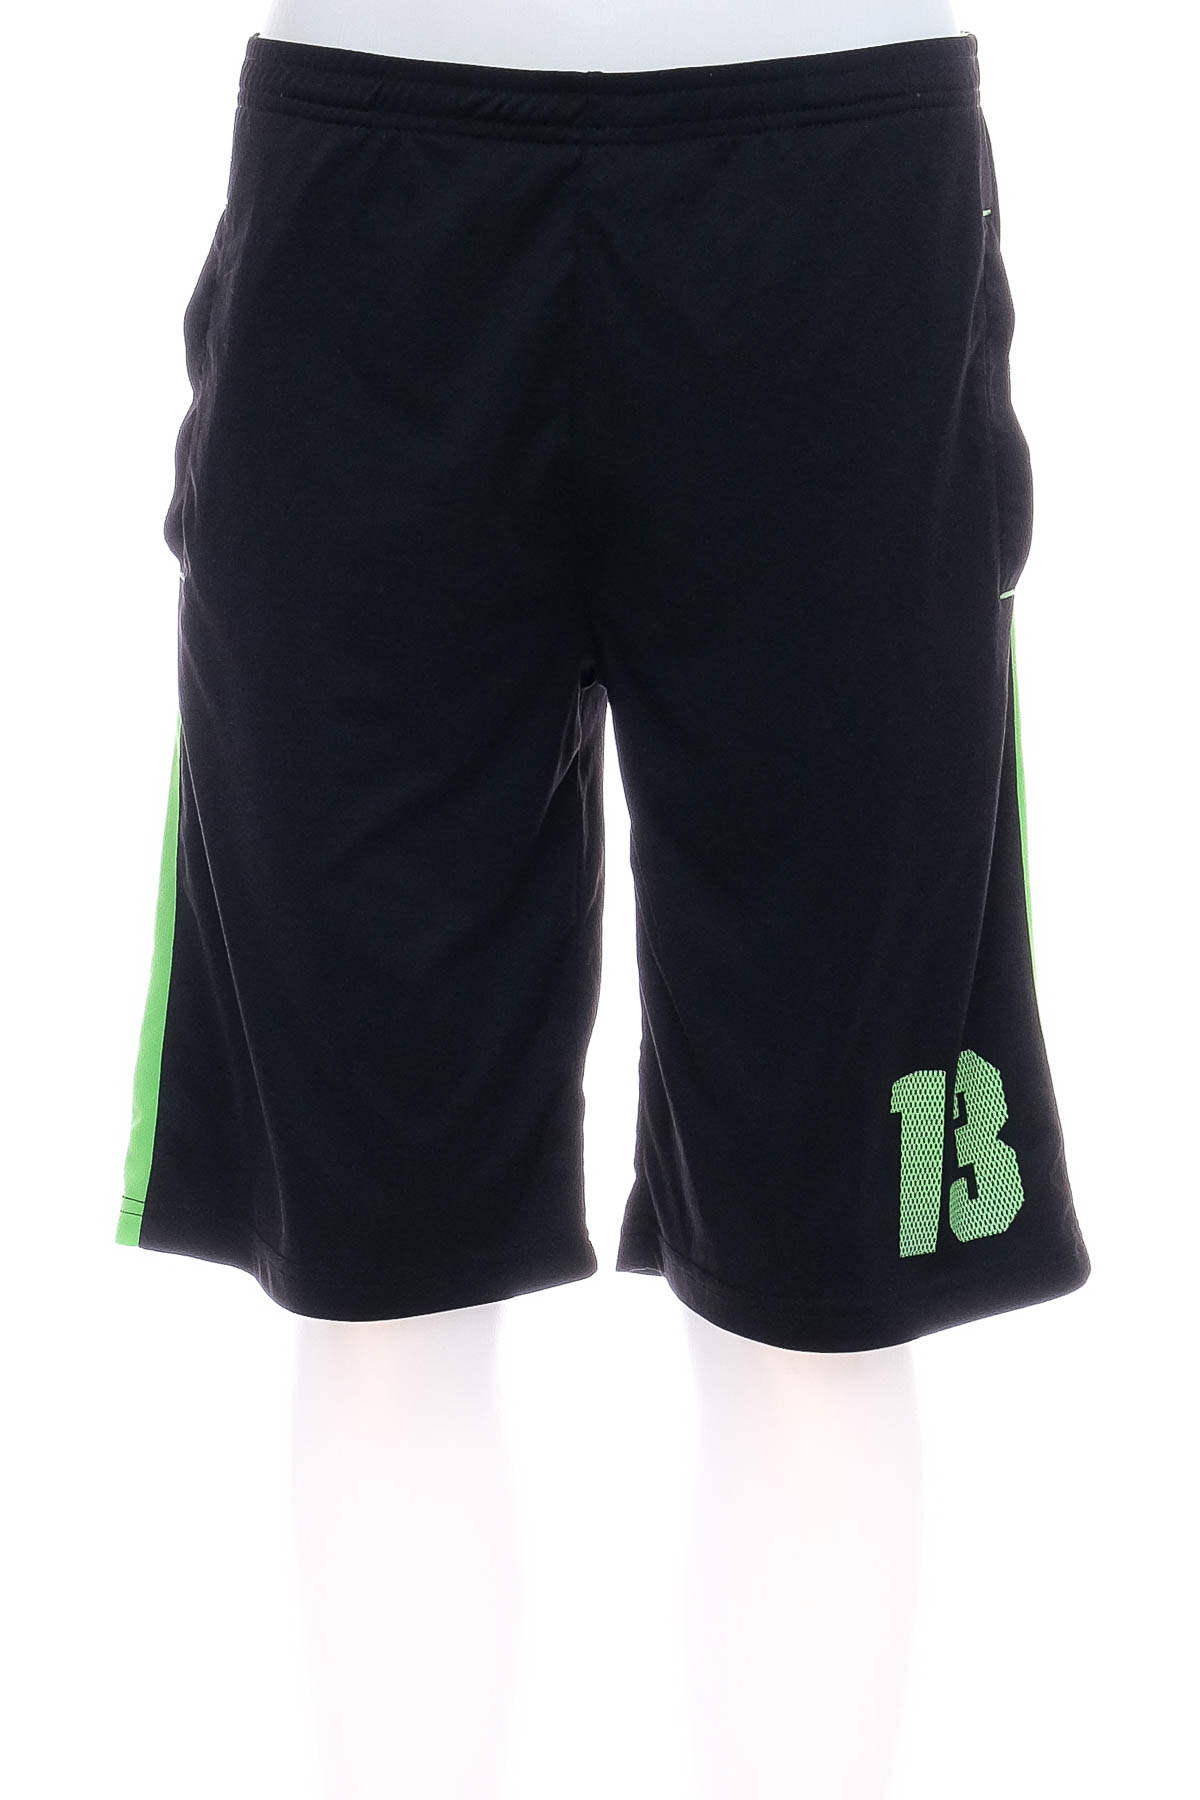 Shorts for boys - Manguun sports - 0